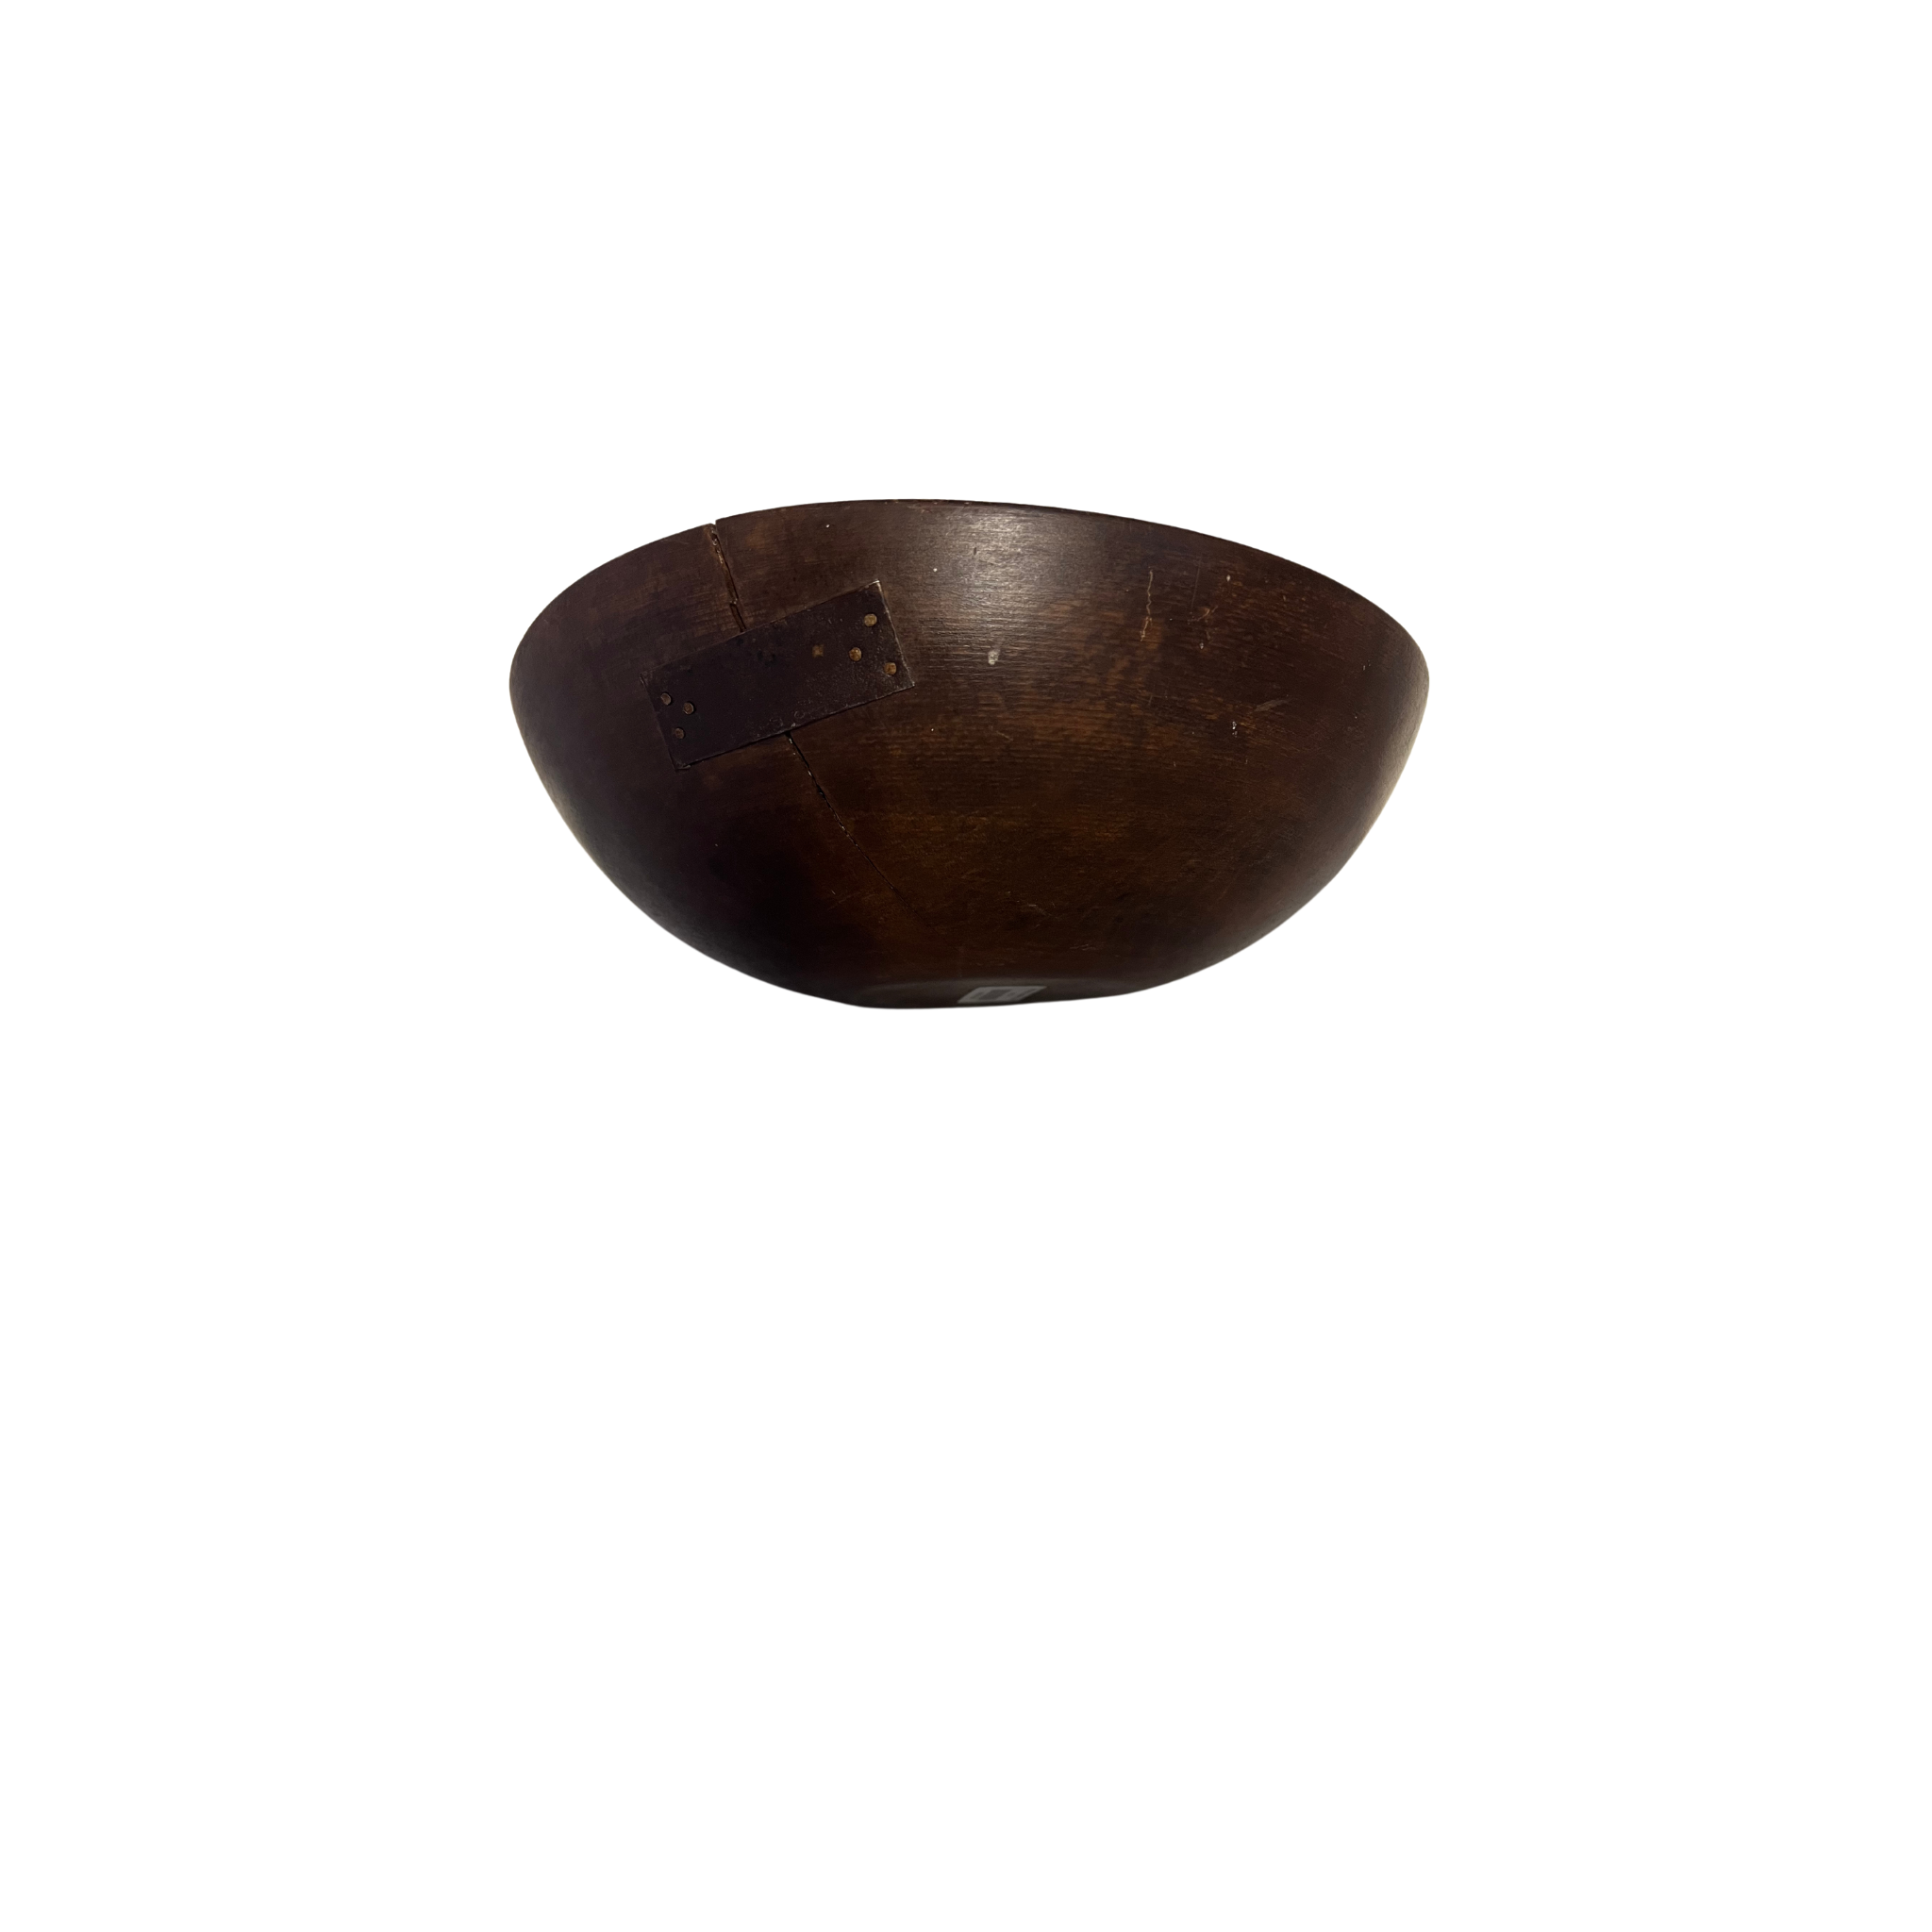 Mended Wooden Bowl